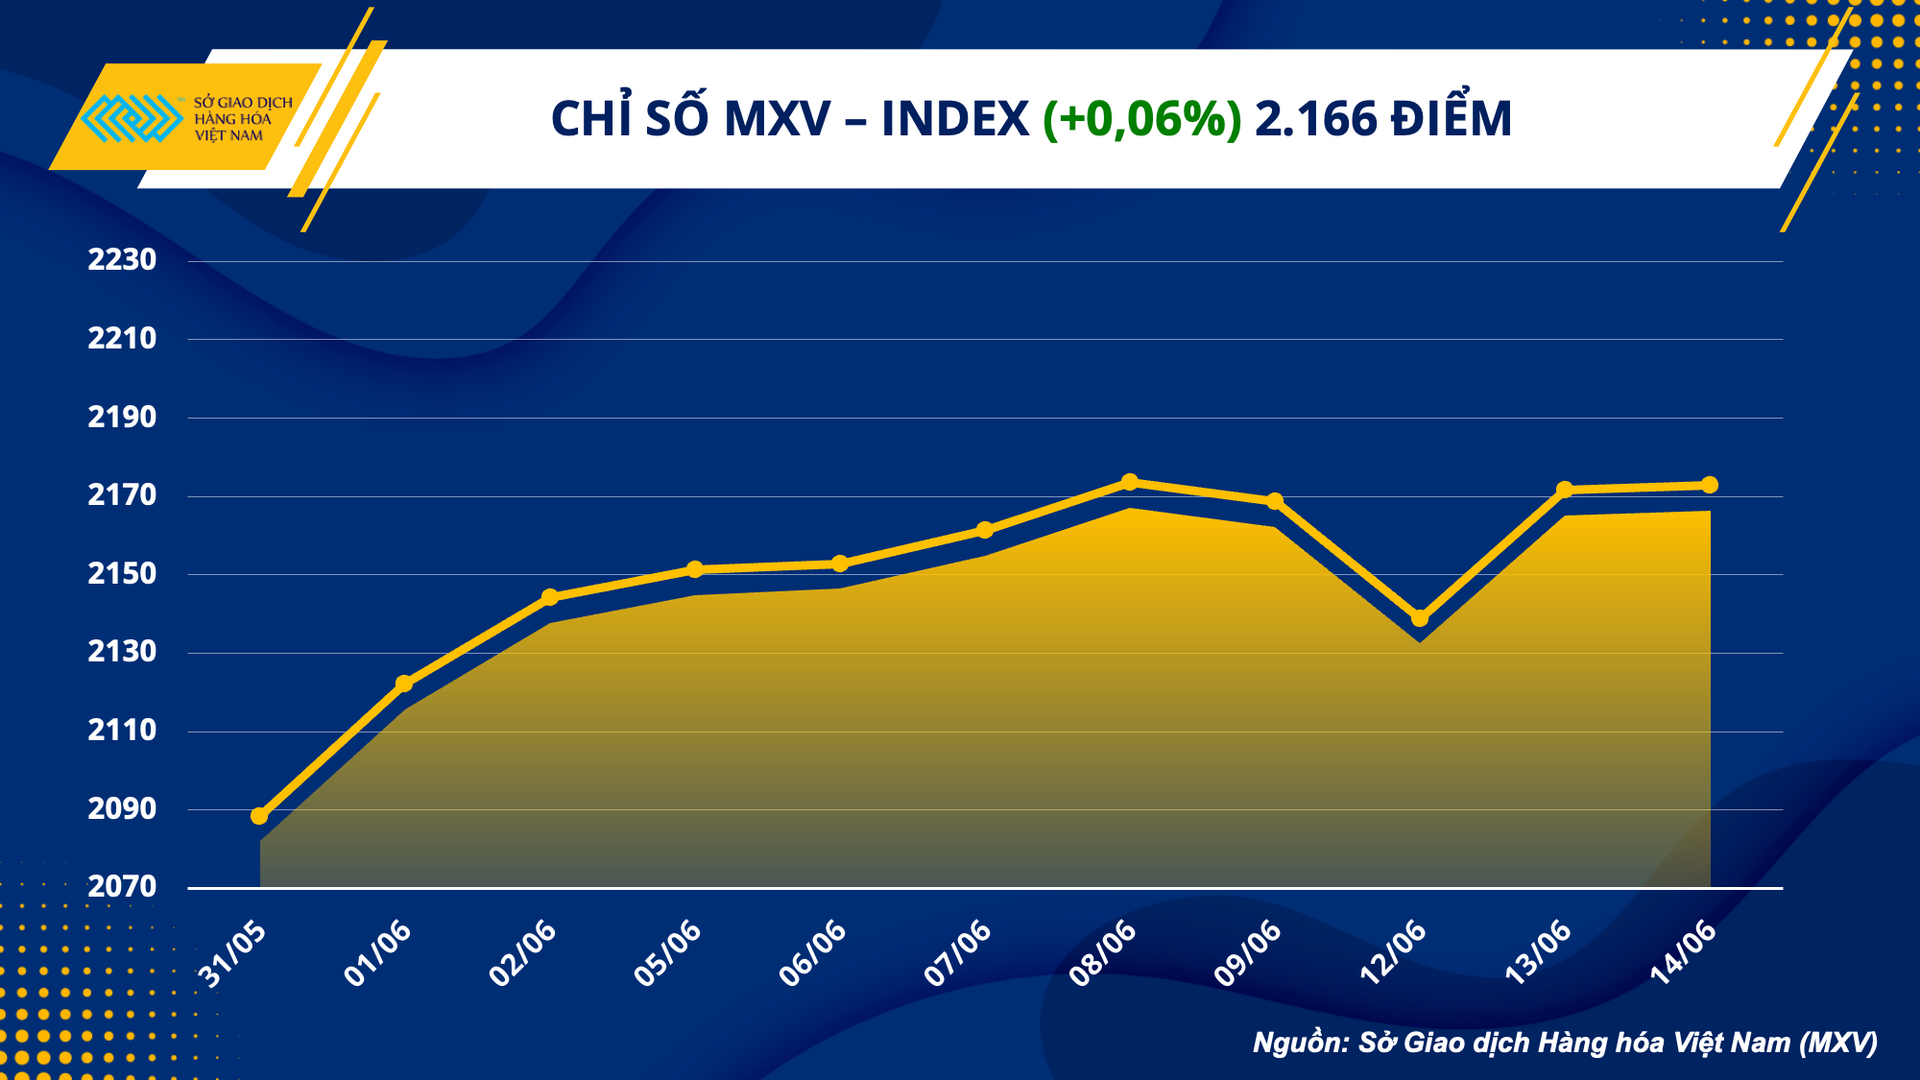 1. mxv - index